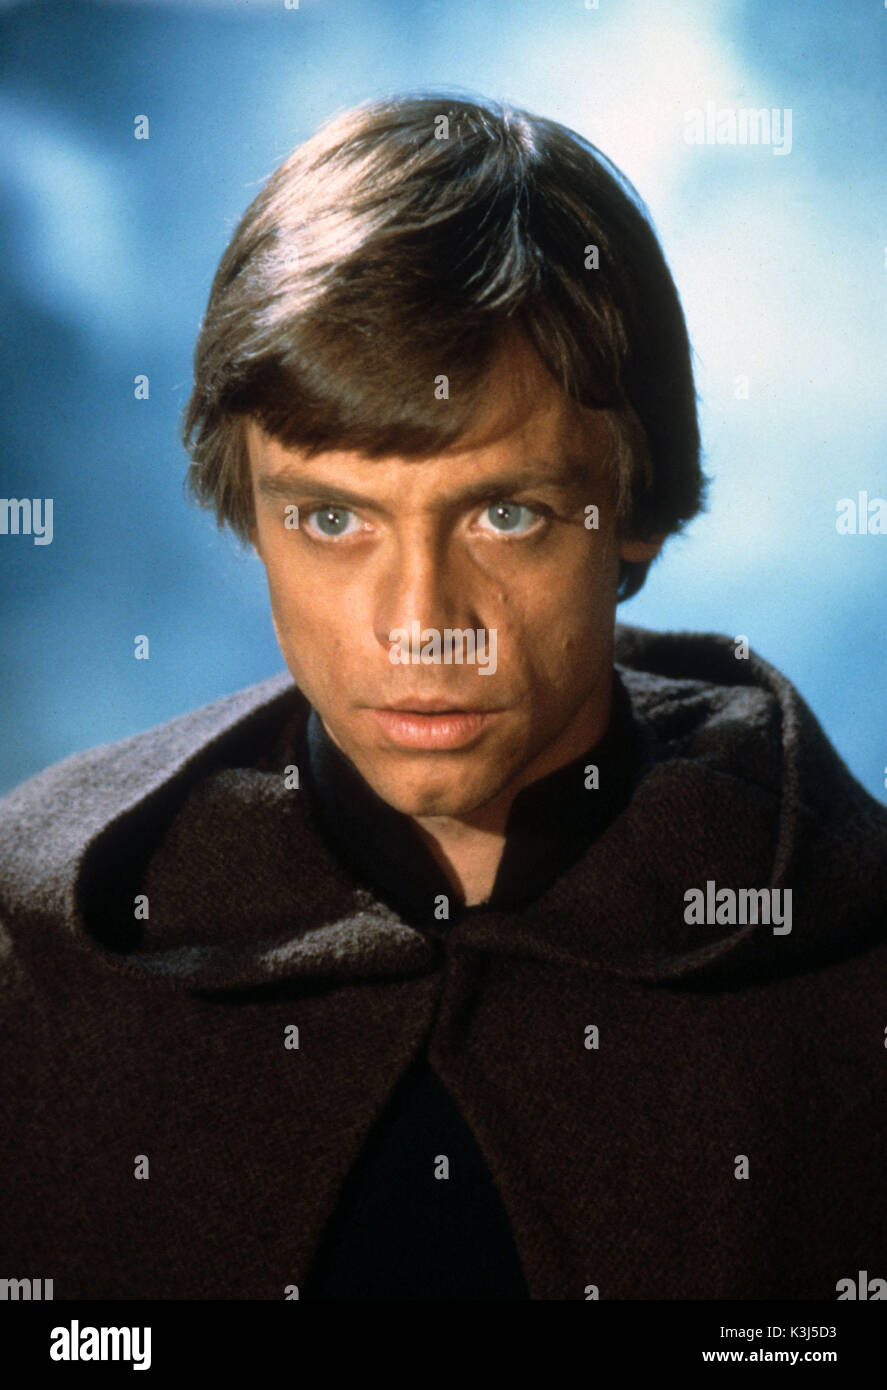 STAR WARS: EPISODE VI - RETURN OF THE JEDI MARK HAMILL as Luke Skywalker     Date: 1983 Stock Photo